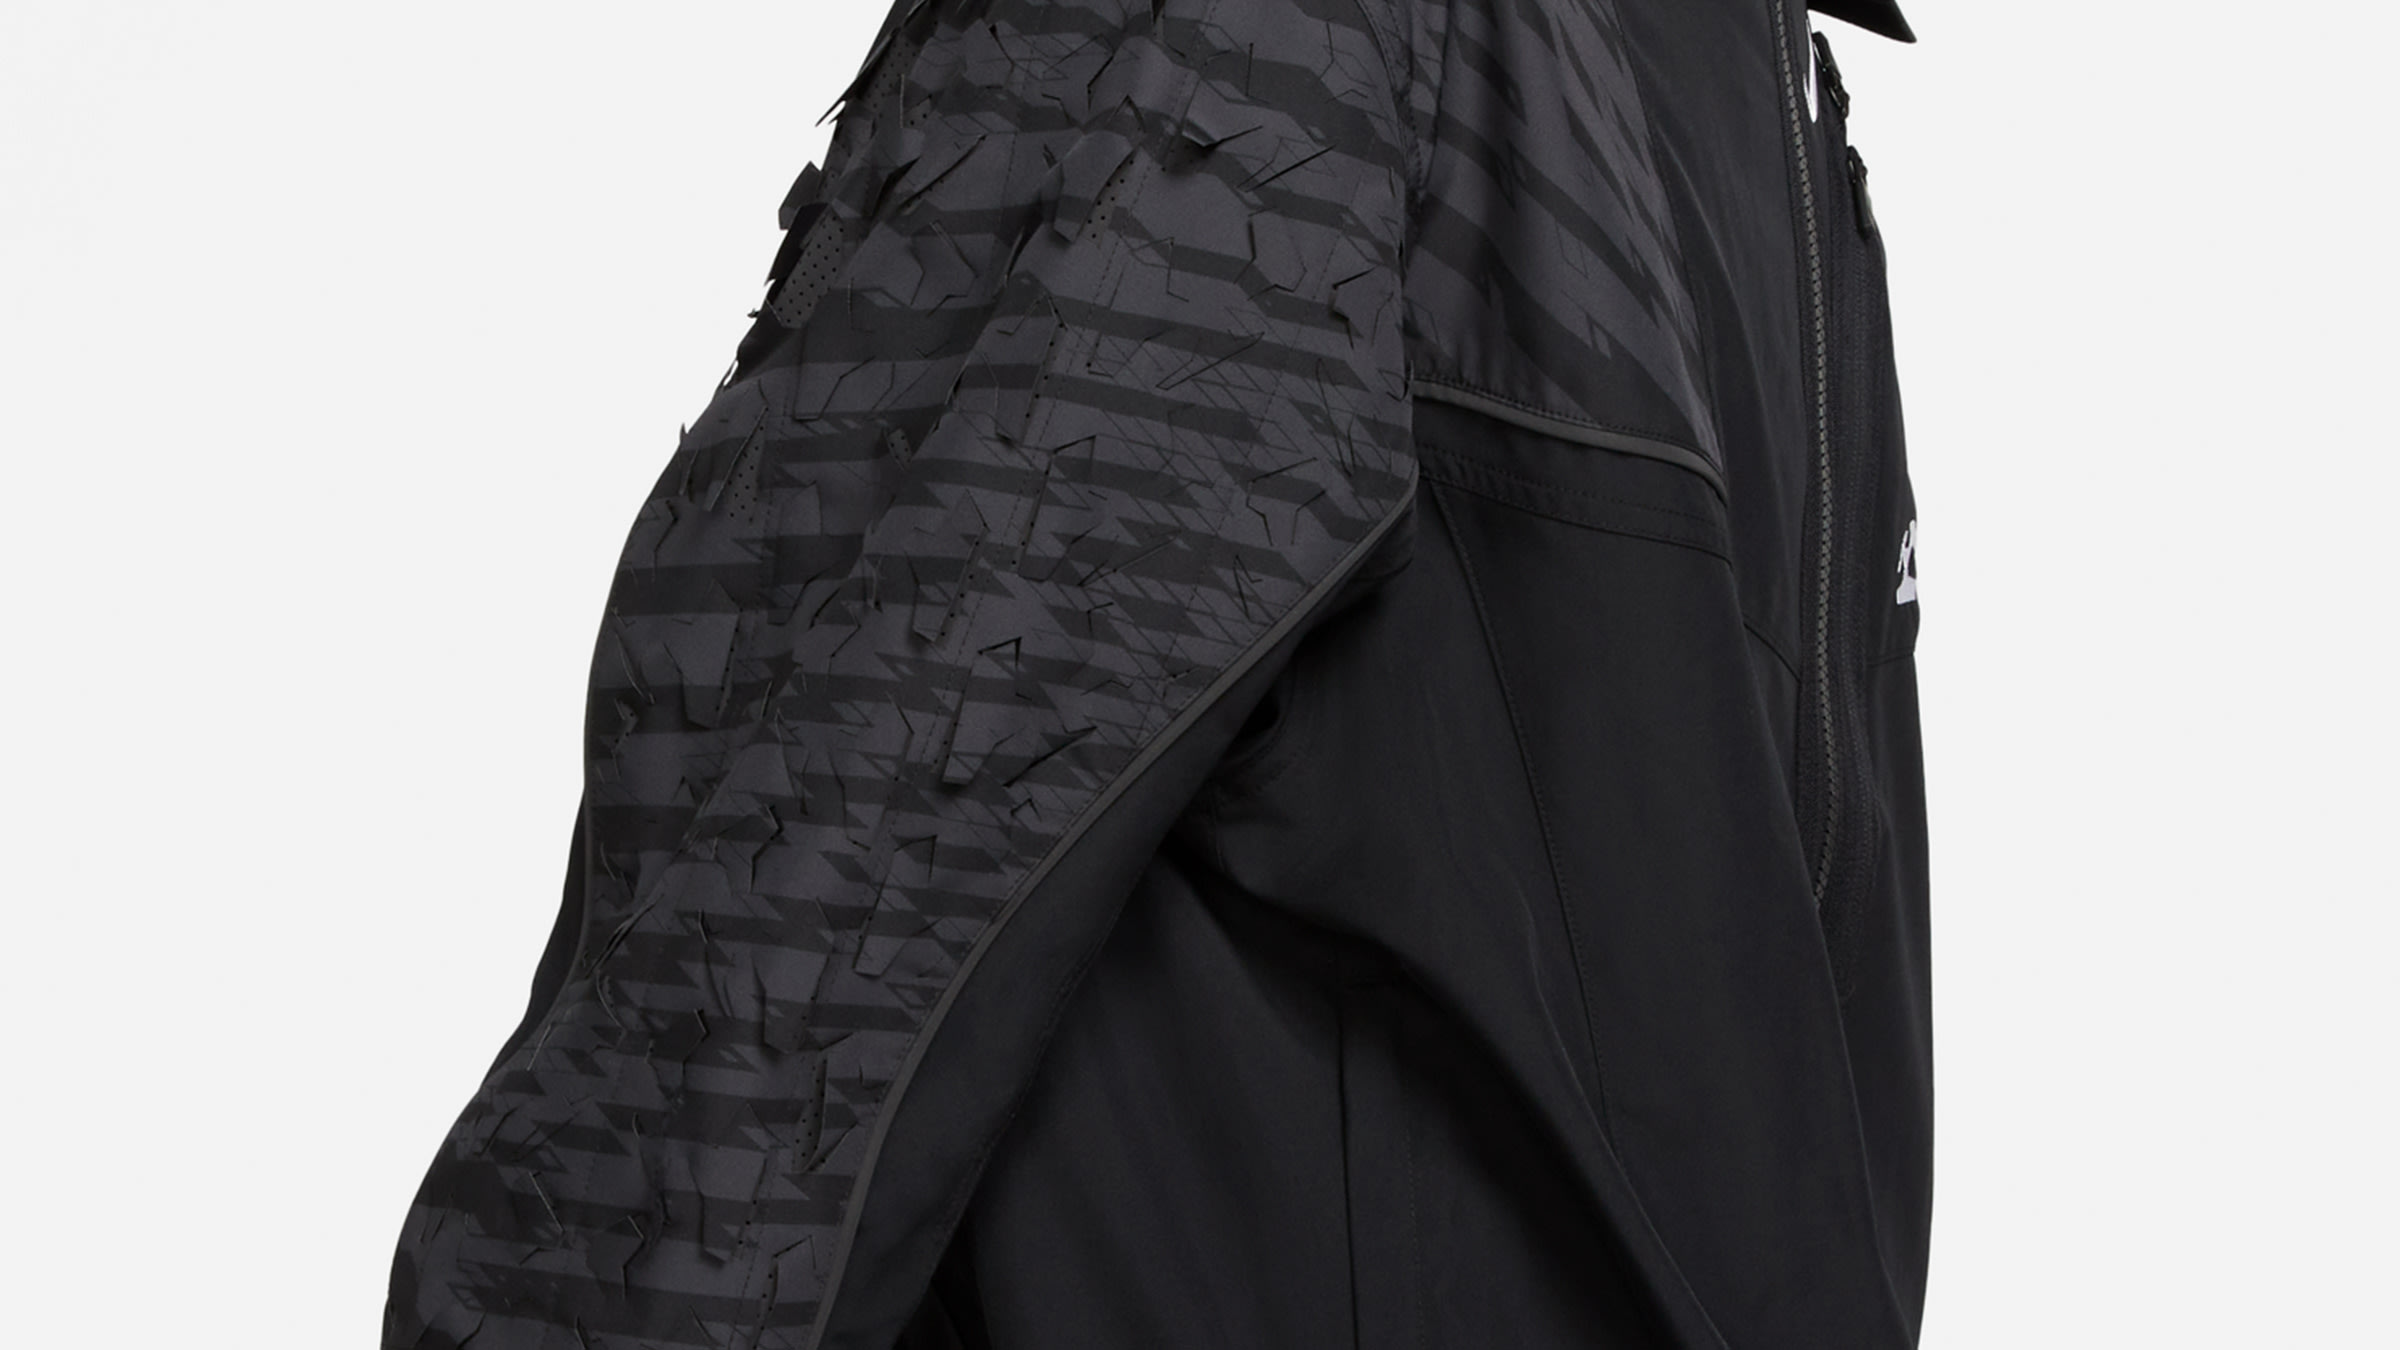 Nike x Acronym Woven Jacket (Black) | END. Launches